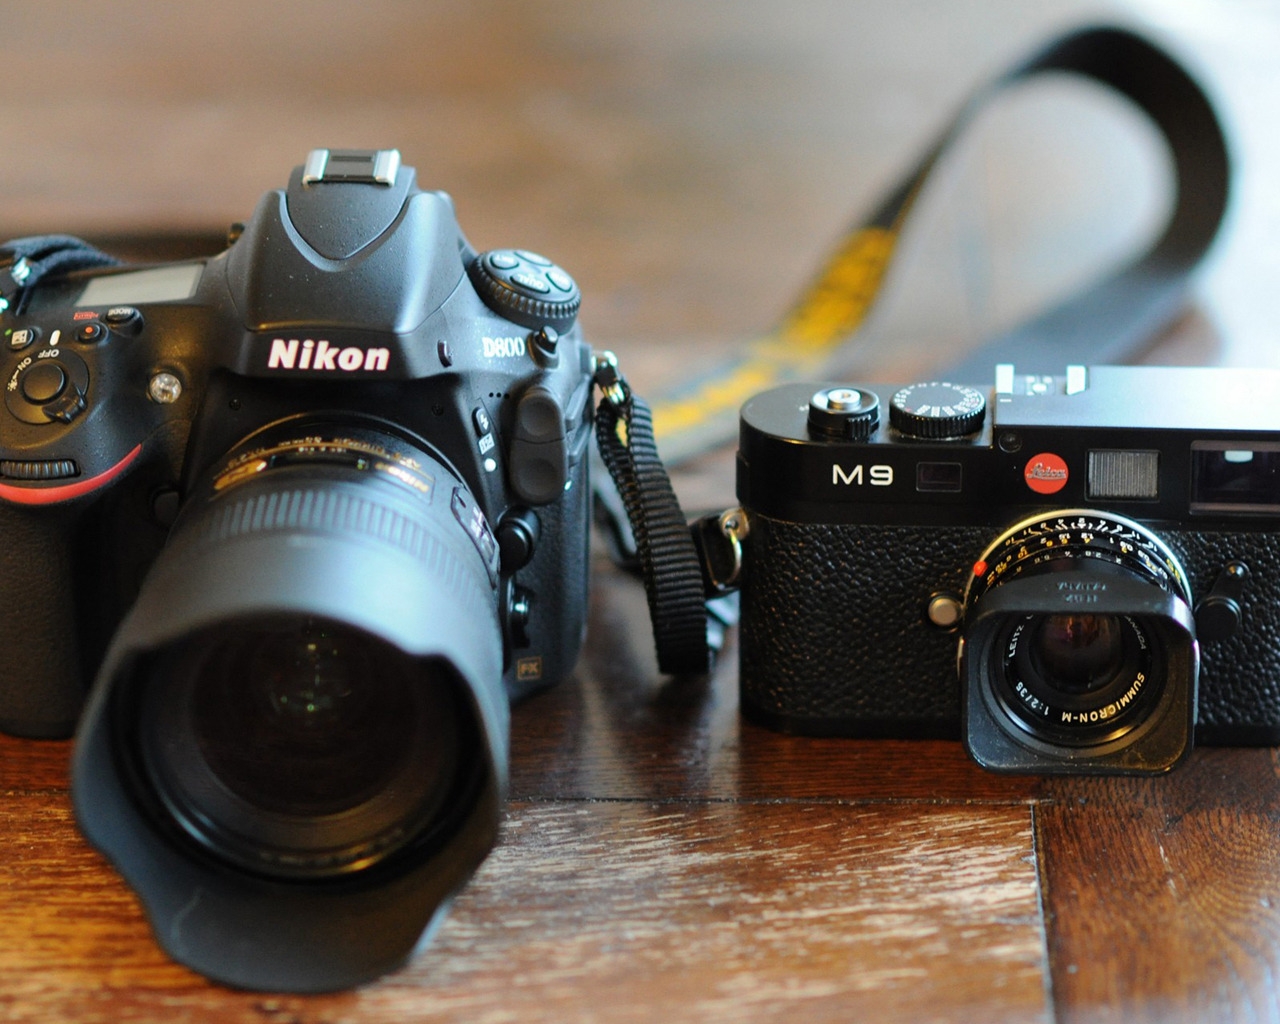 Nikon and Leica for 1280 x 1024 resolution